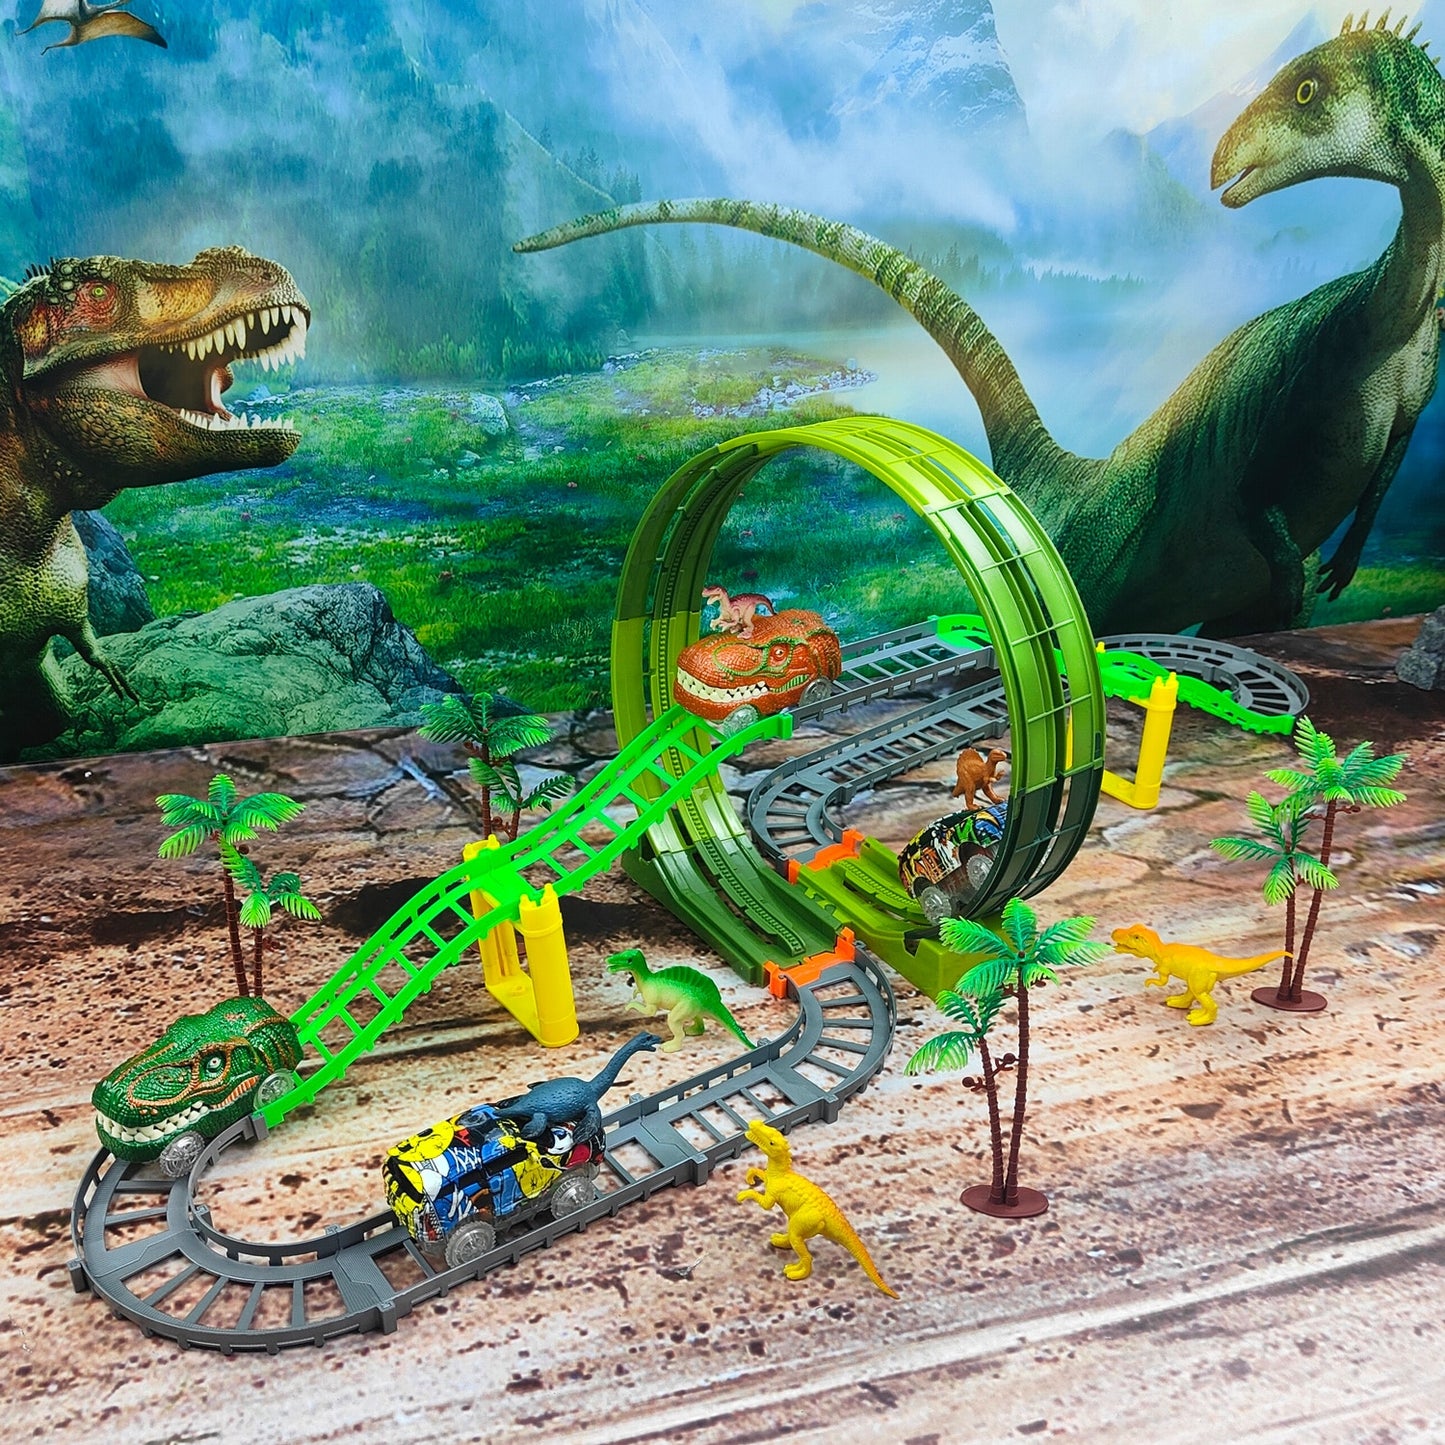 Anti-Gravity Dinosaur Curved Track Set